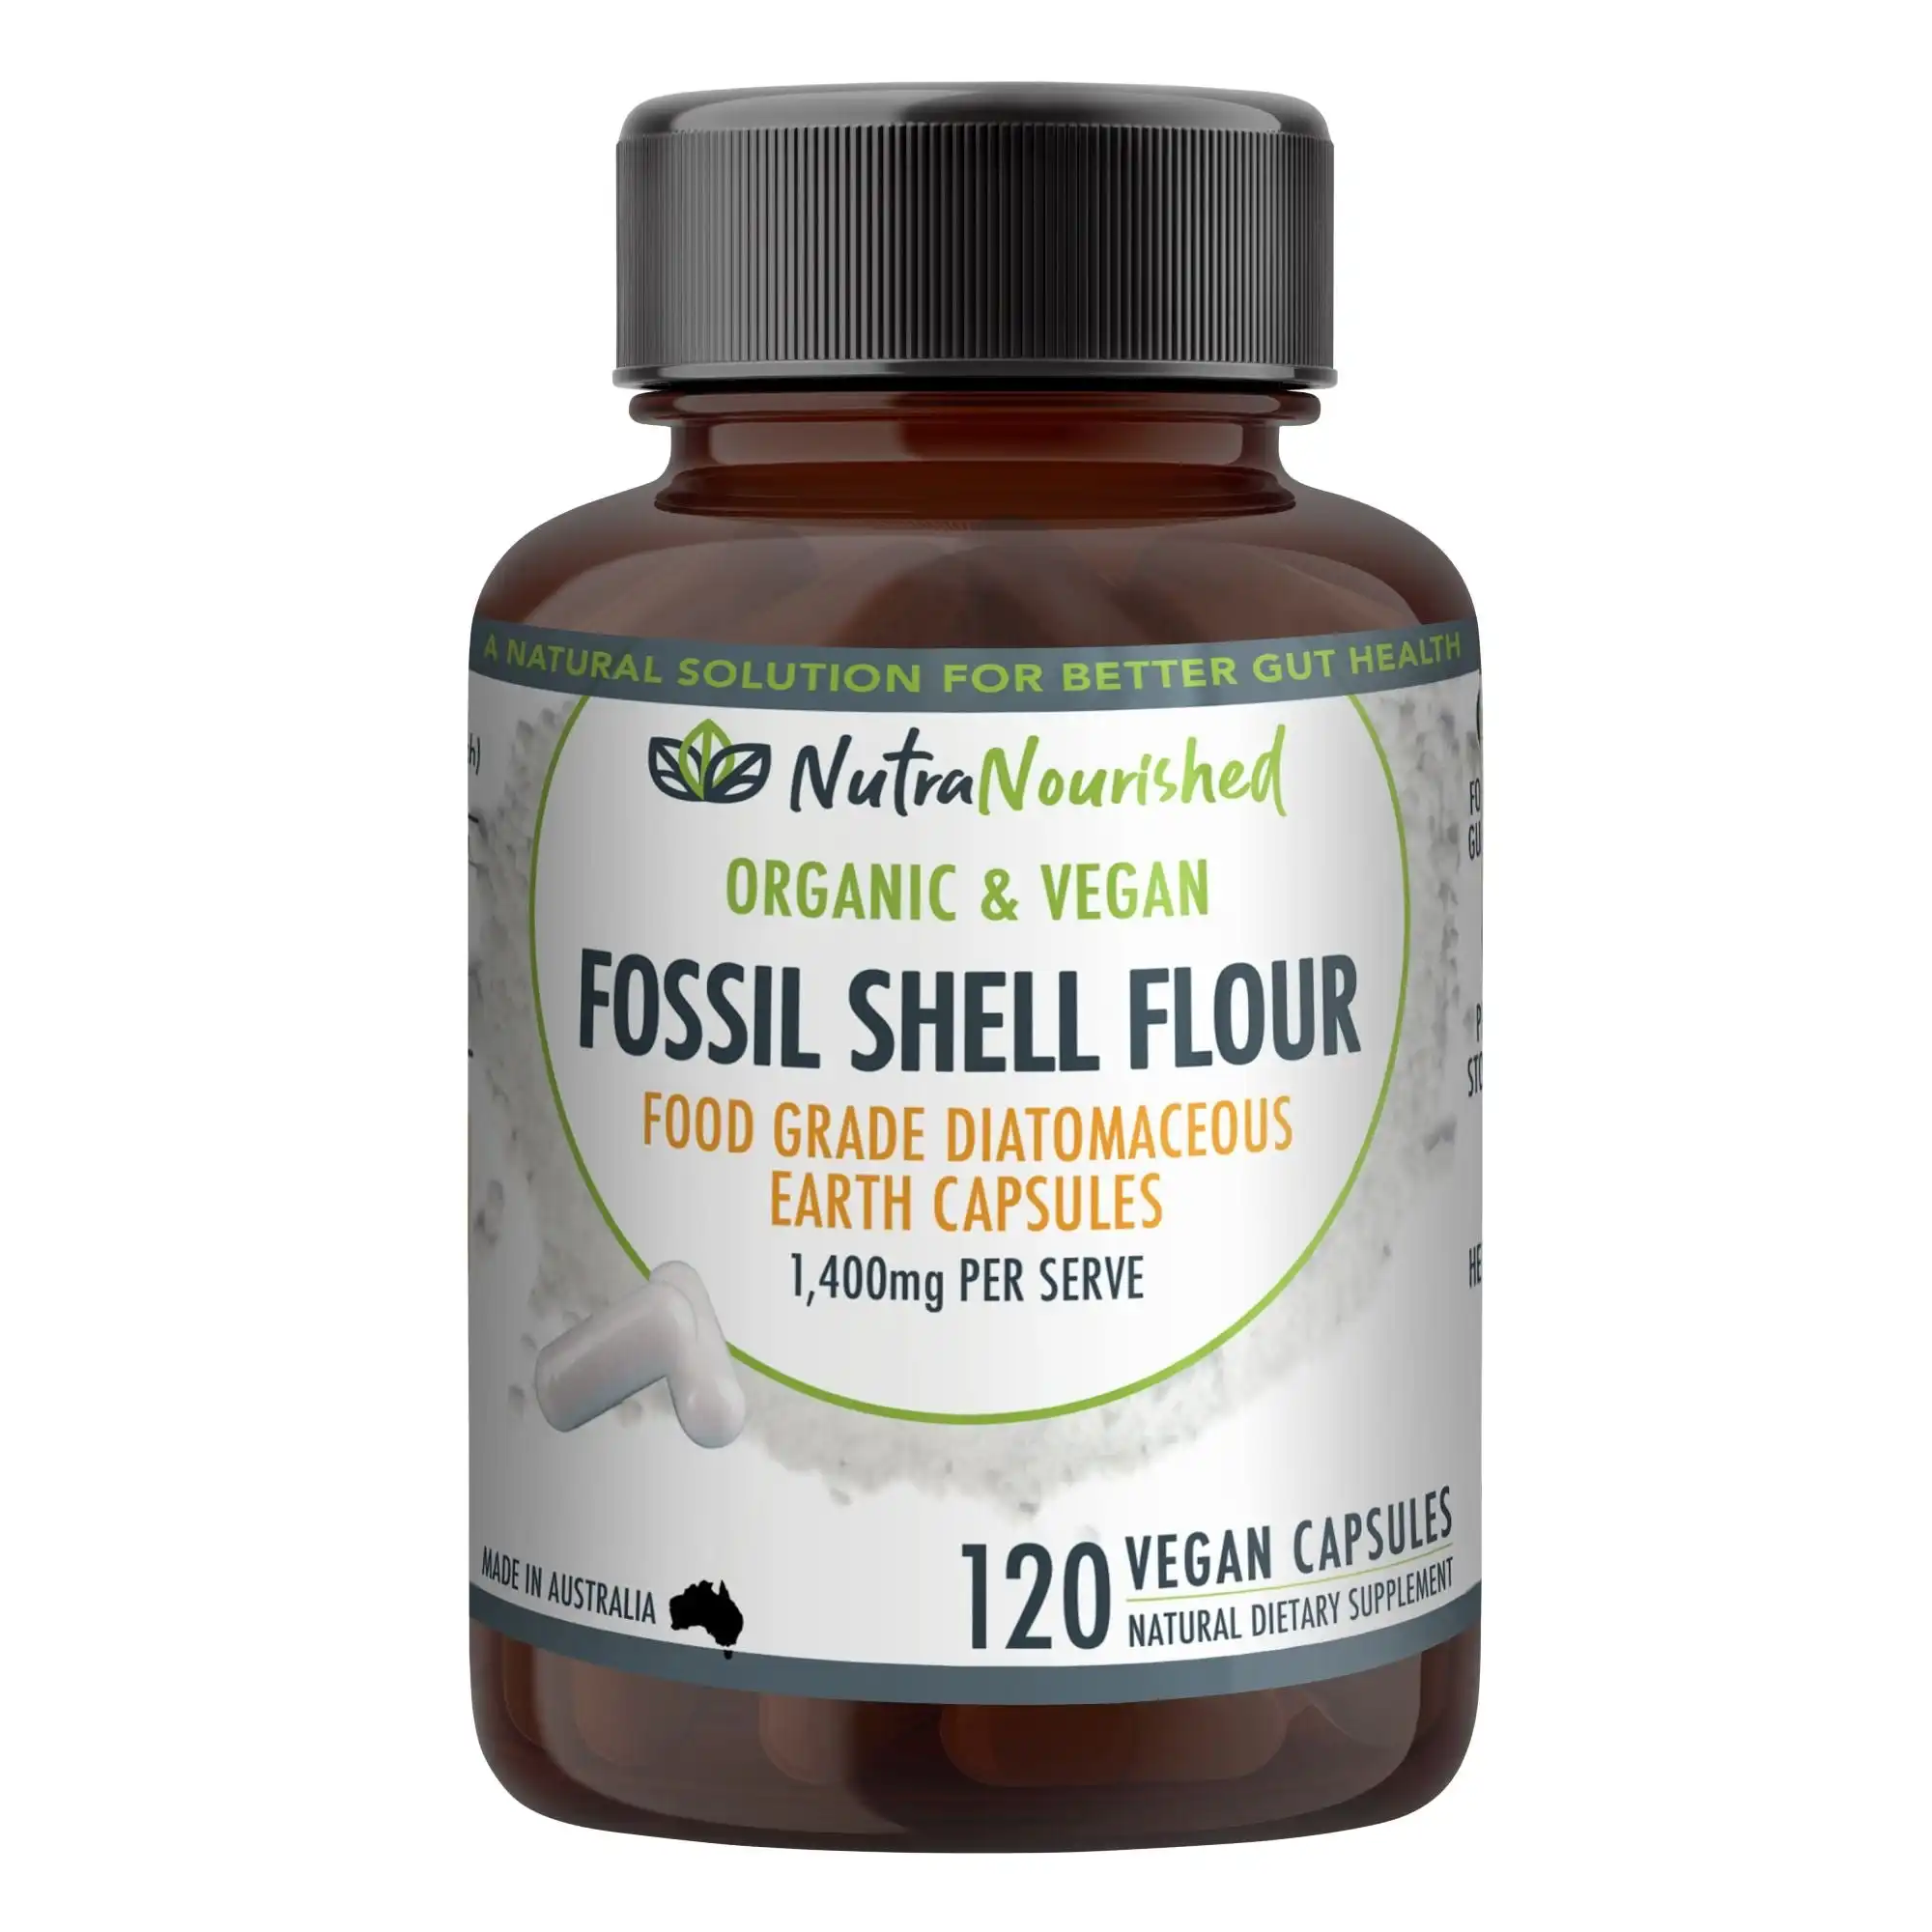 Diatomaceous Earth Food Grade Fossil Shell Flour Capsules (1,400mg) 120 Vegan Capsules